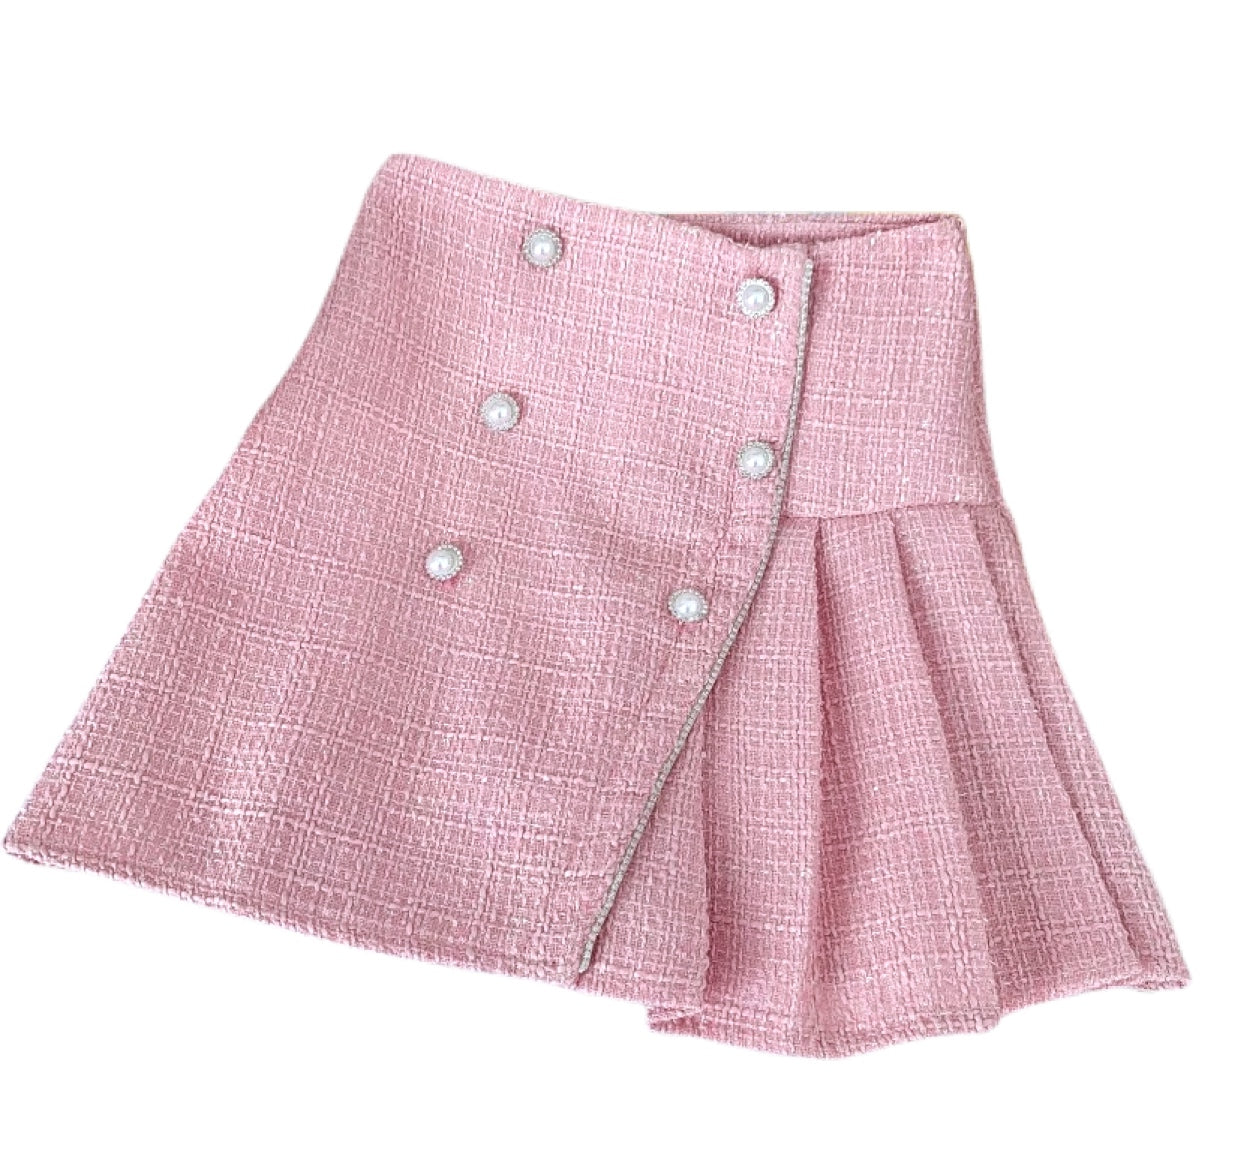 Clueless Pink Tweed skirt